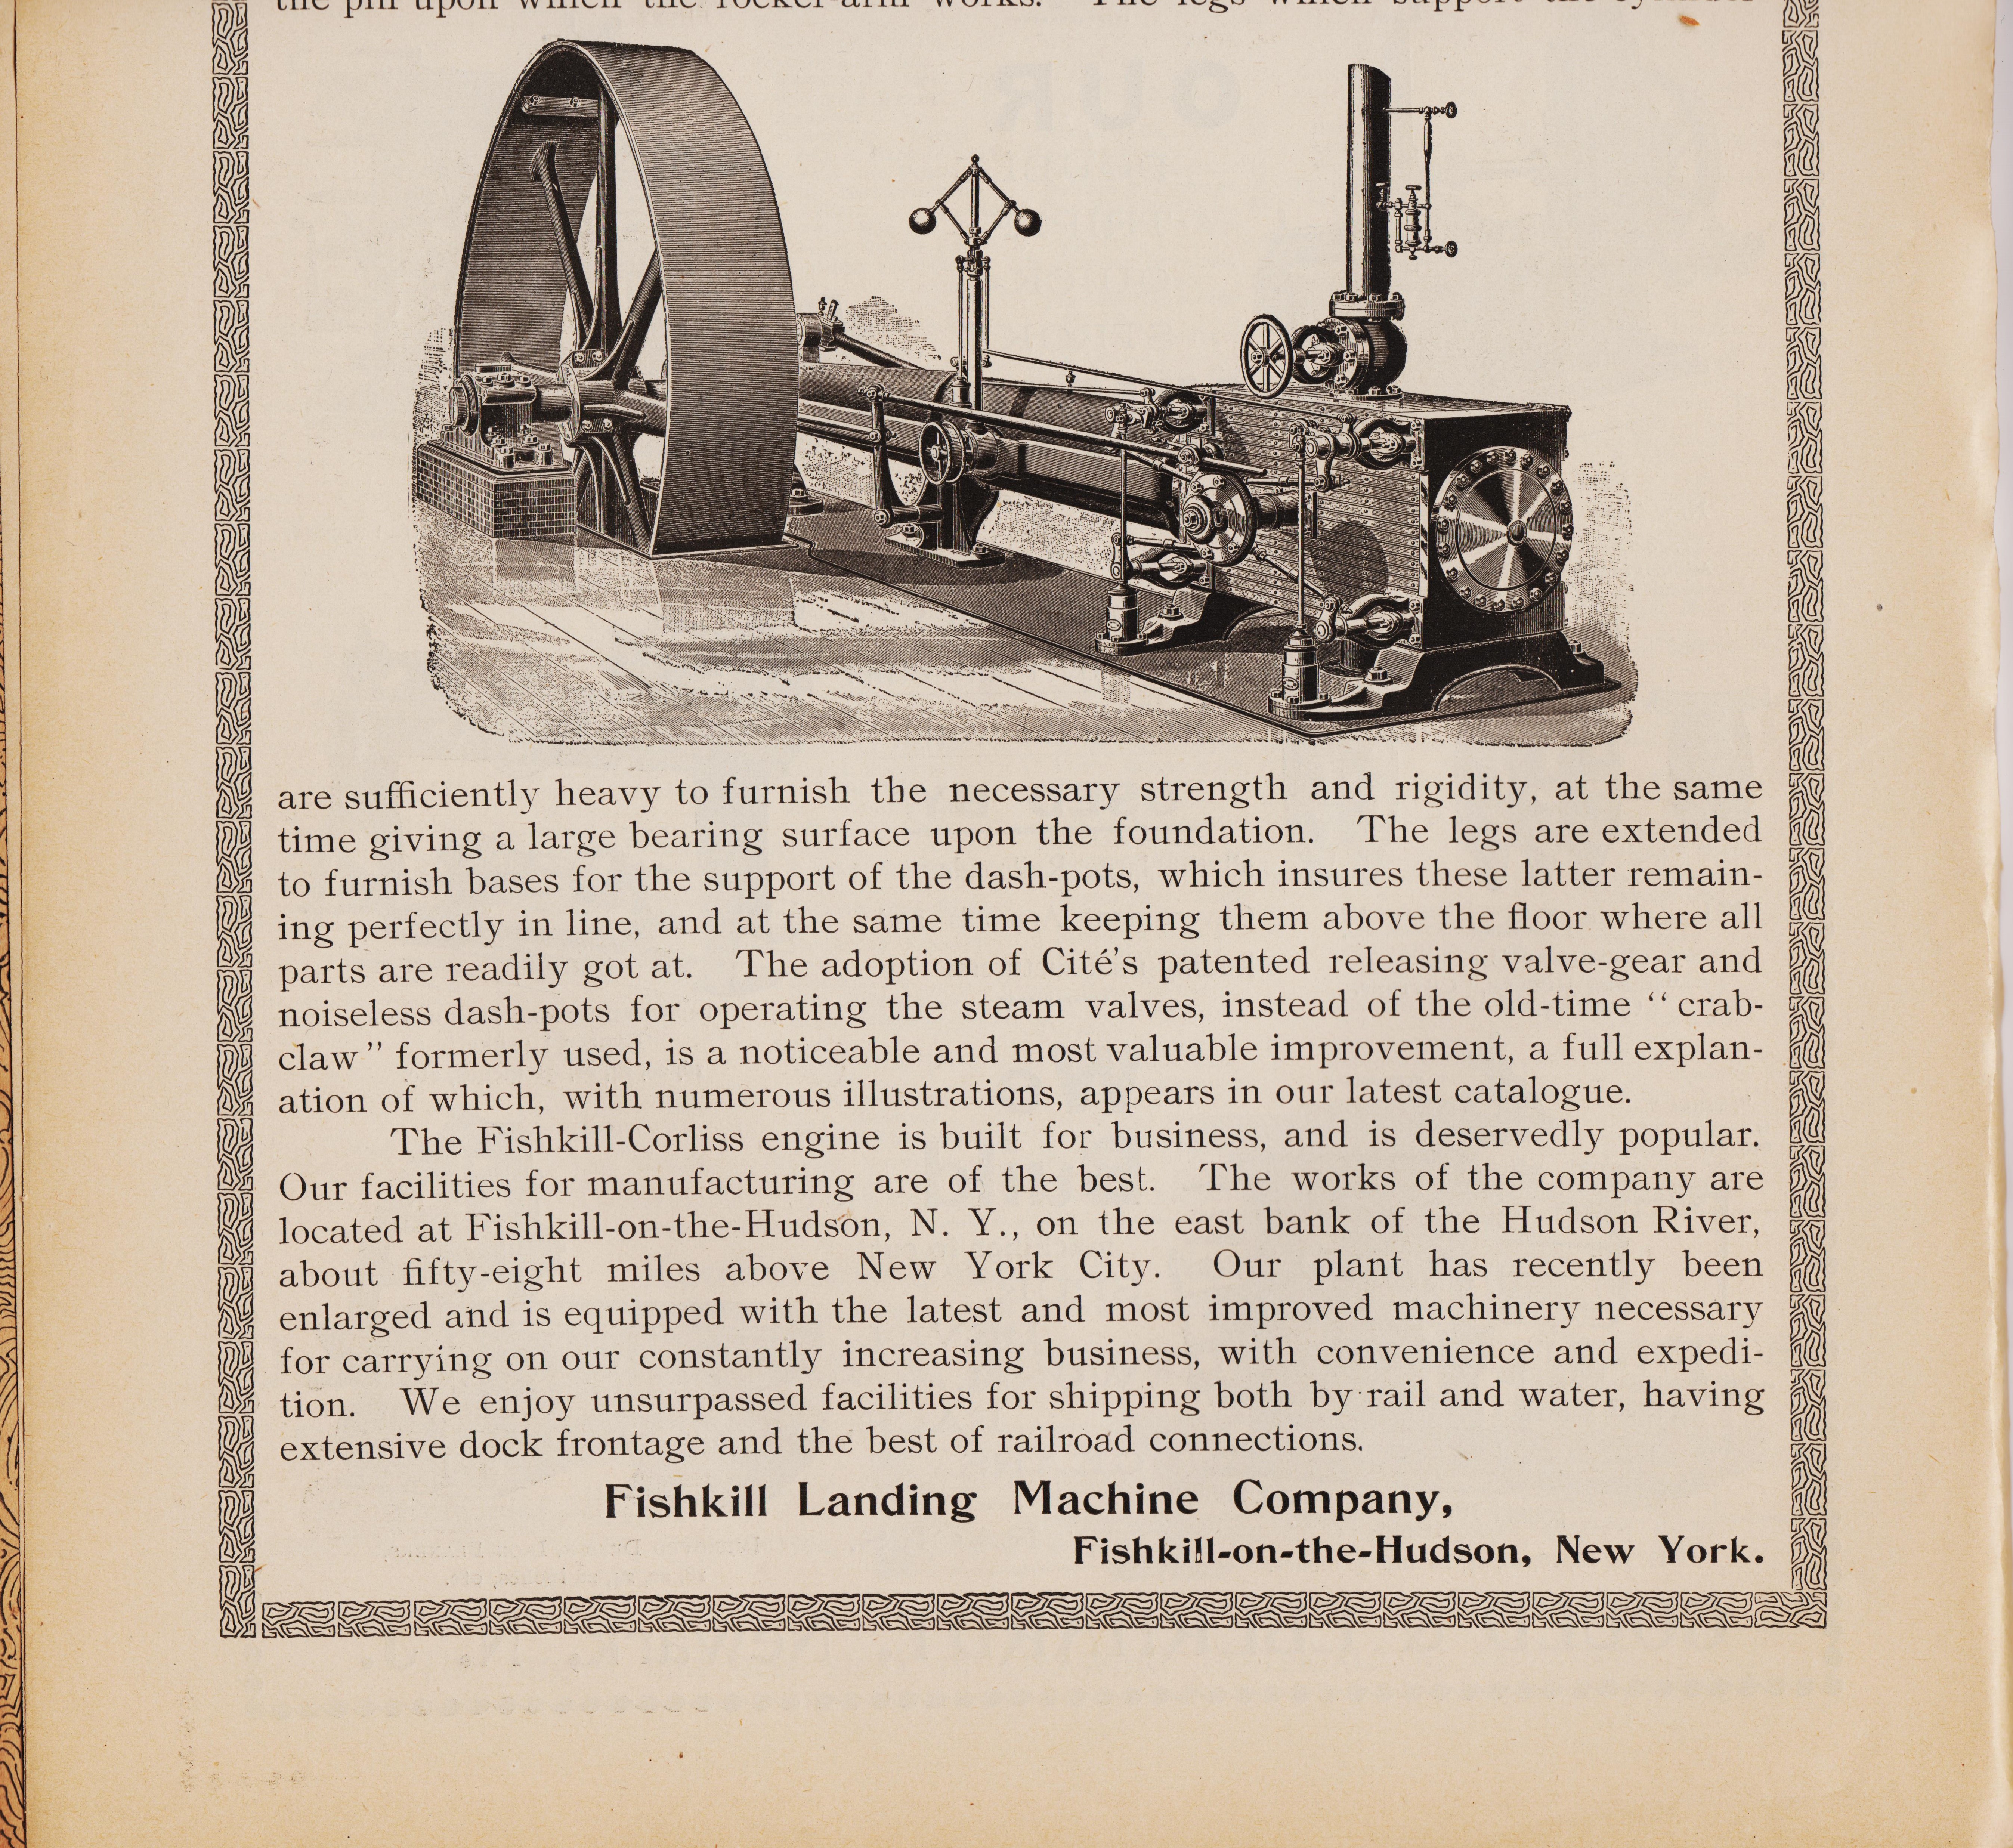 http://antiquemachinery.com/images-2019/American-Machinist-May-1896-vol-2-no-9-pg-iii-top-Toledo-Egan-J-A-Fay-Co-Wood-Working-Pattern-Lingerwood-.jpg